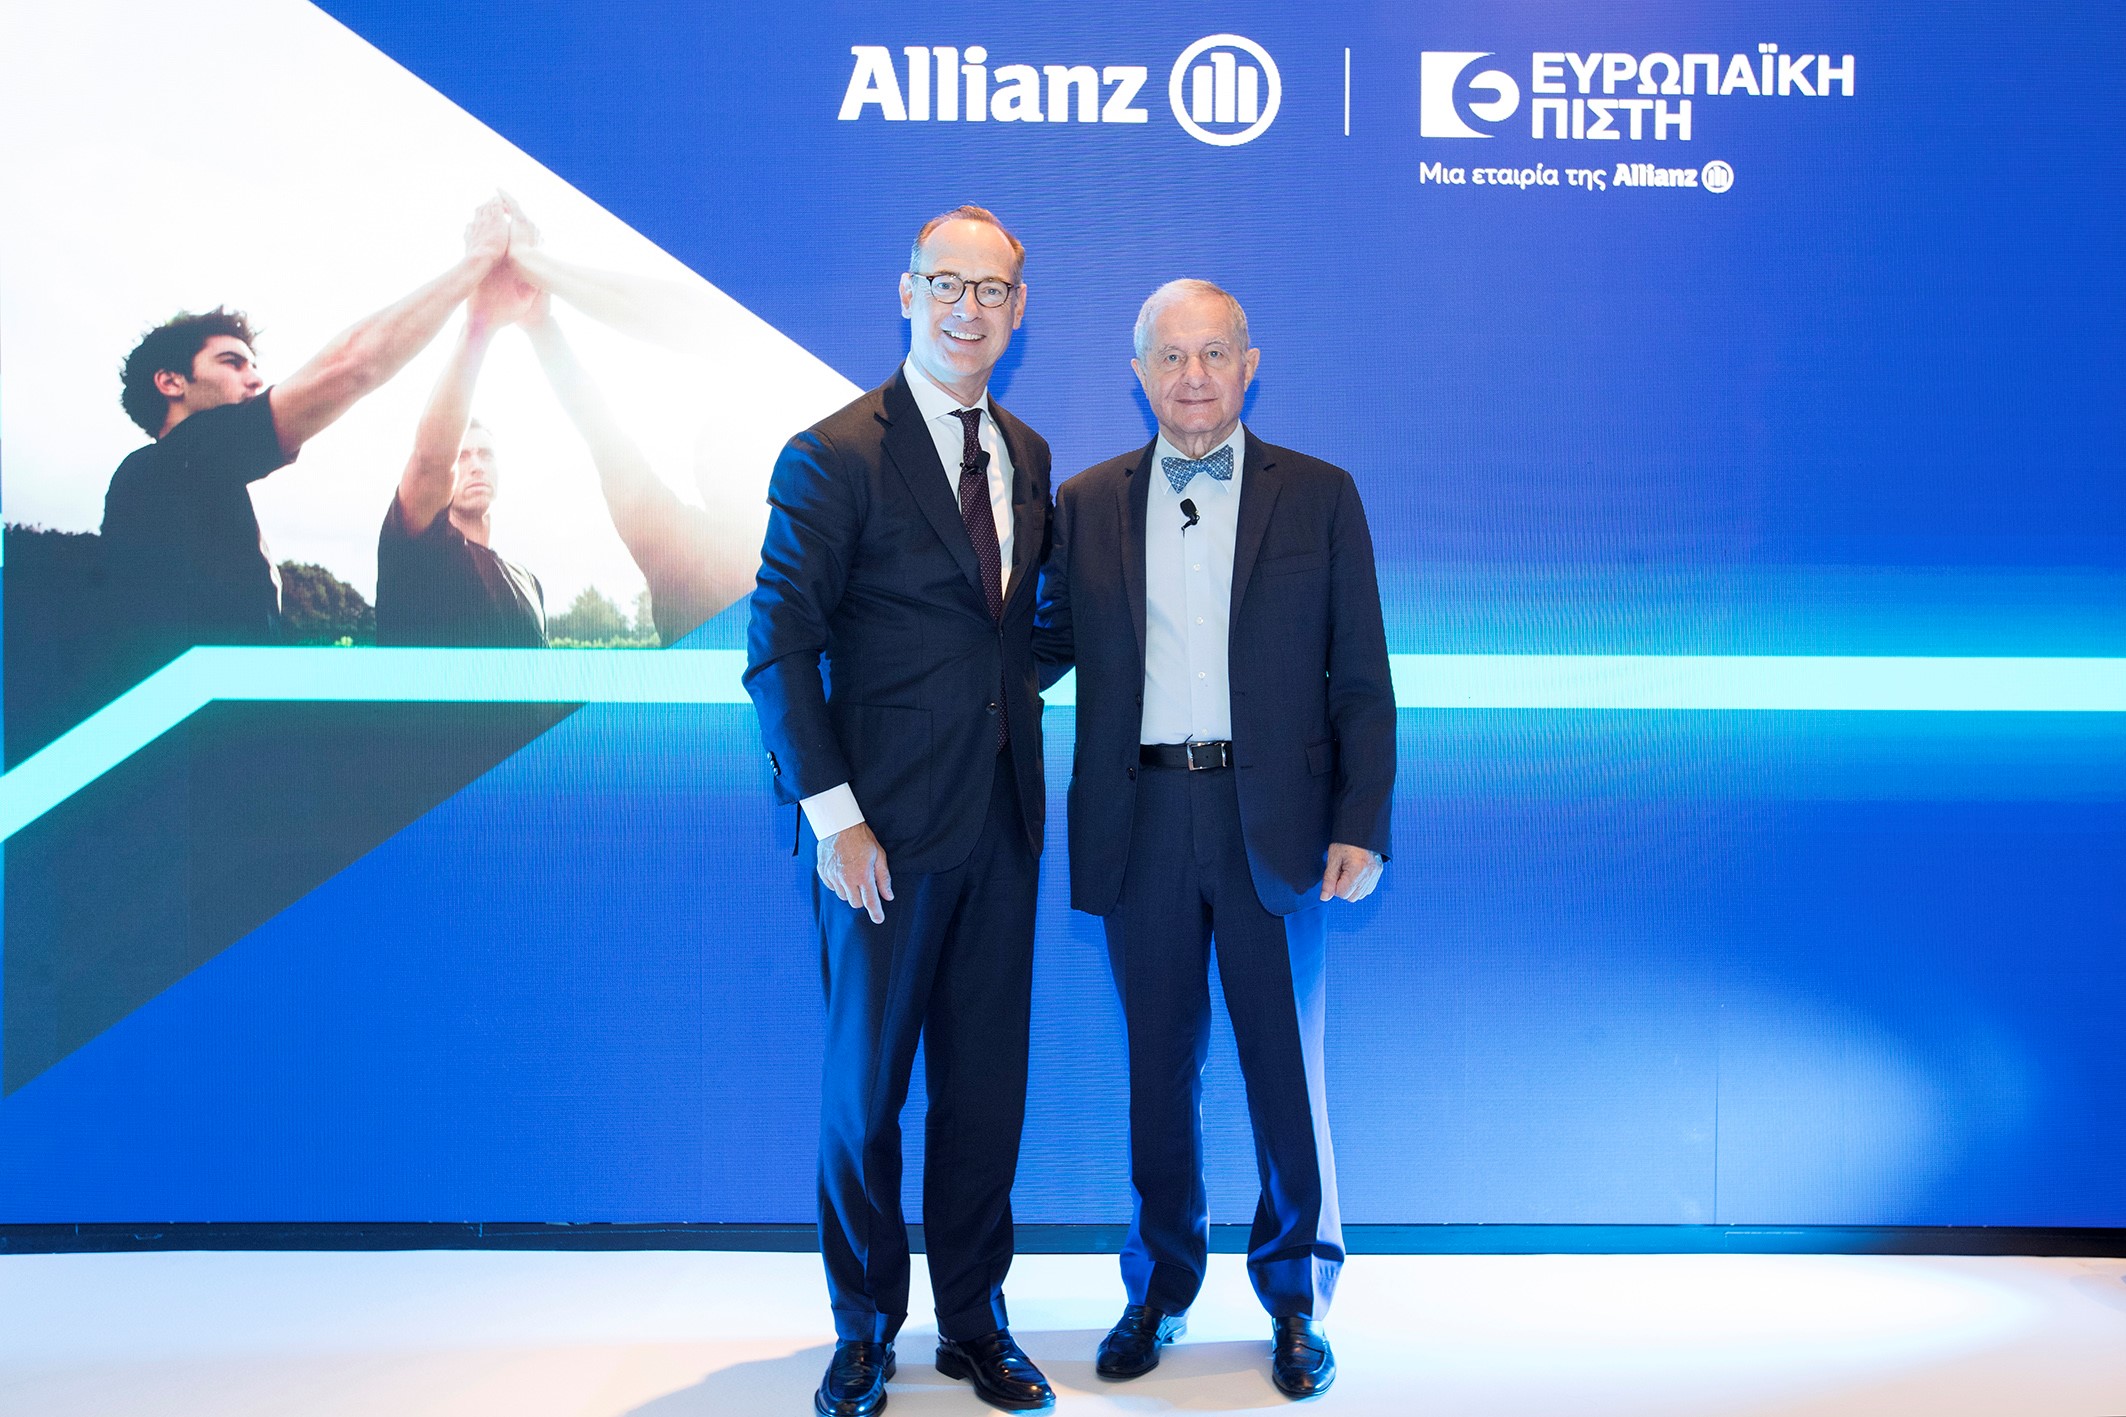 Allianz – Ευρωπαϊκή Πίστη: Εκδήλωση για εργαζόμενους και συνεργάτες μετά την εξαγορά